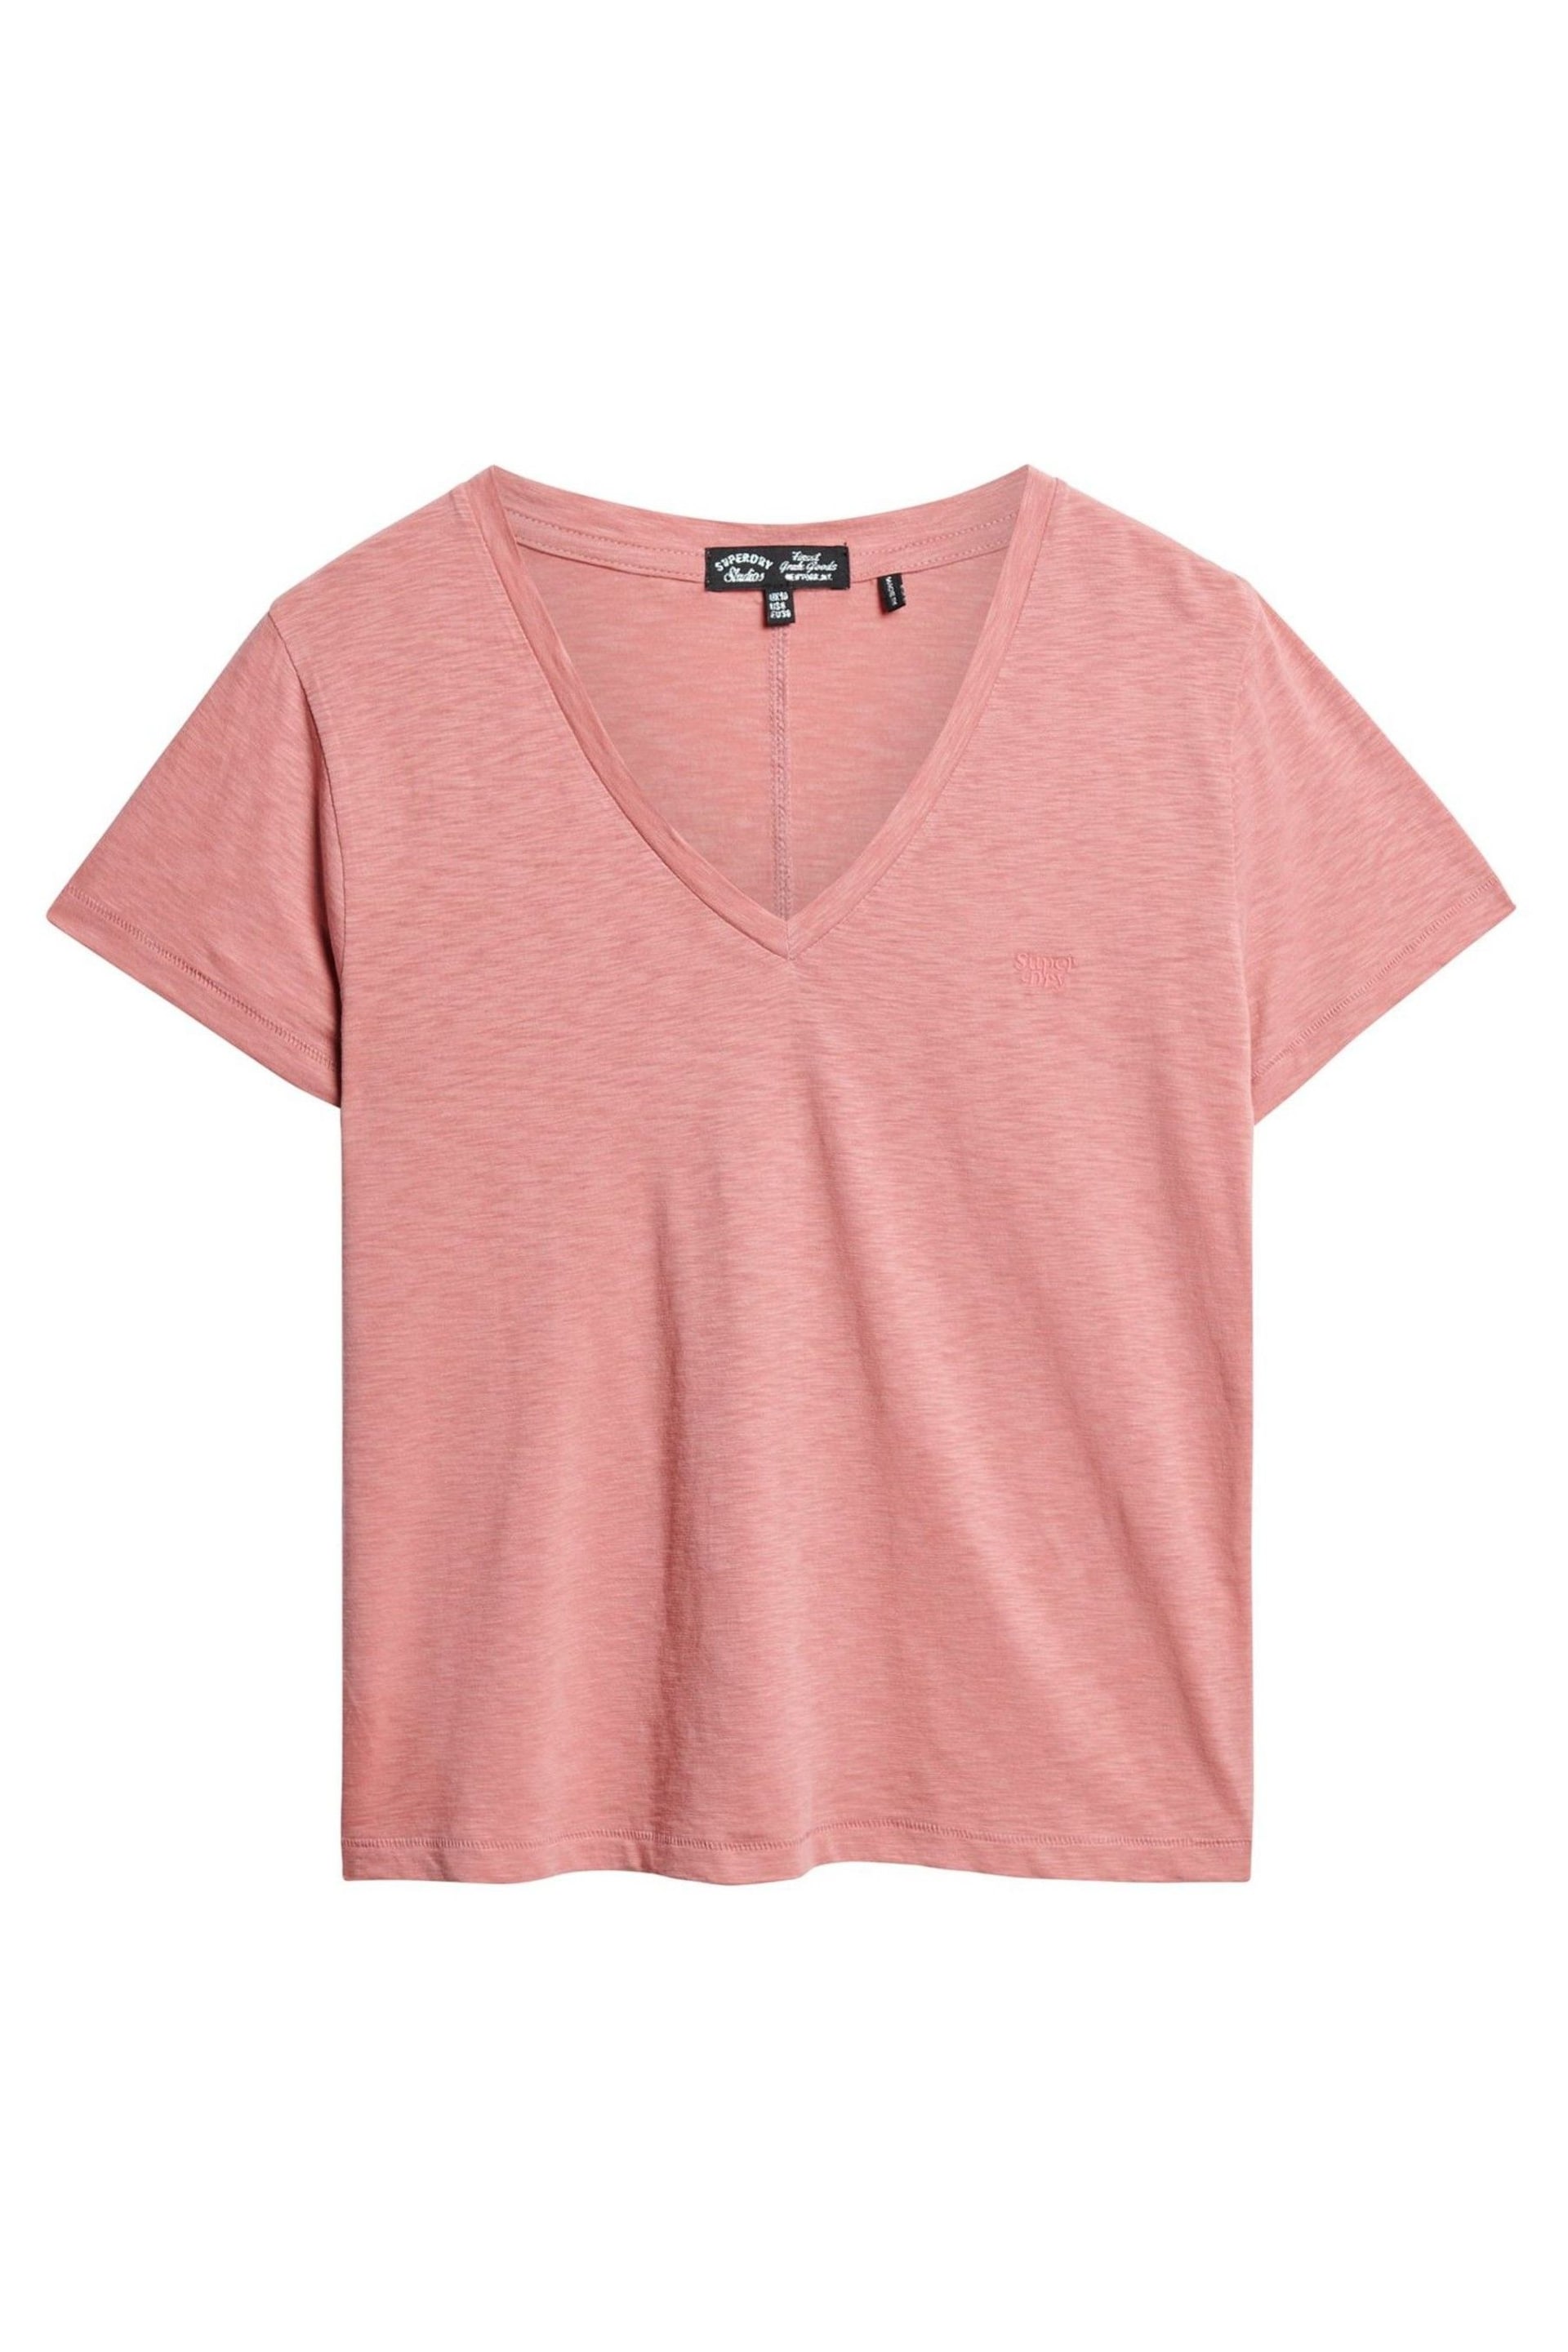 Superdry Dusty Rose Pink Slub Embroidered V-Neck T-Shirt - Image 4 of 6